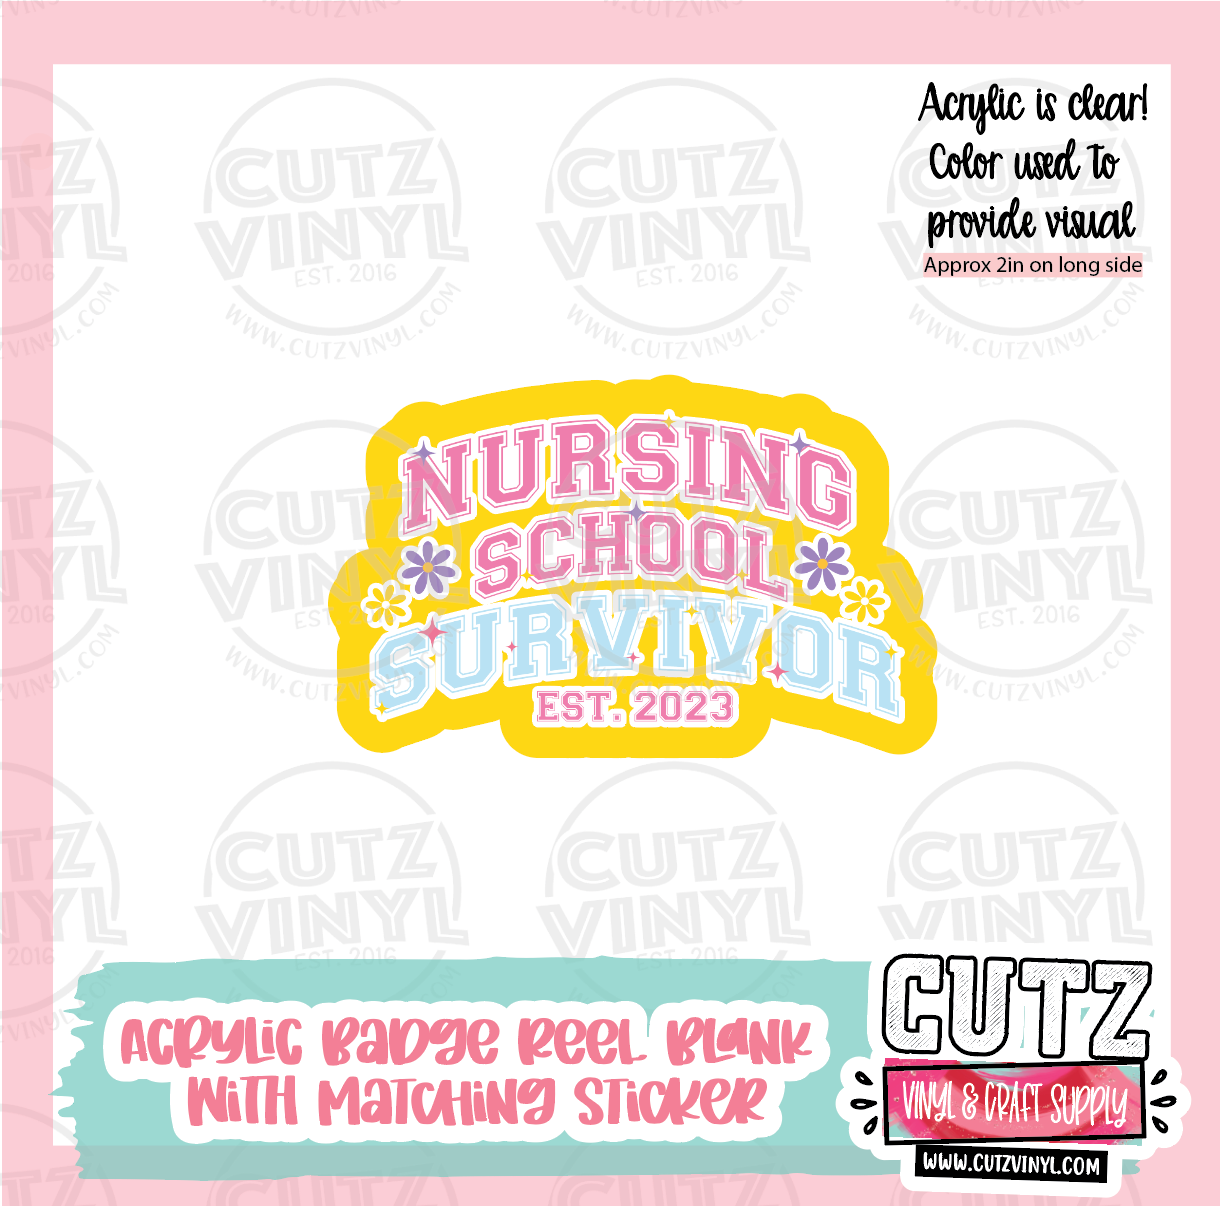 Nursing School Survivor - Acrylic Badge Reel Blank and Matching Sticke –  Cutz Vinyl and Craft Supplies